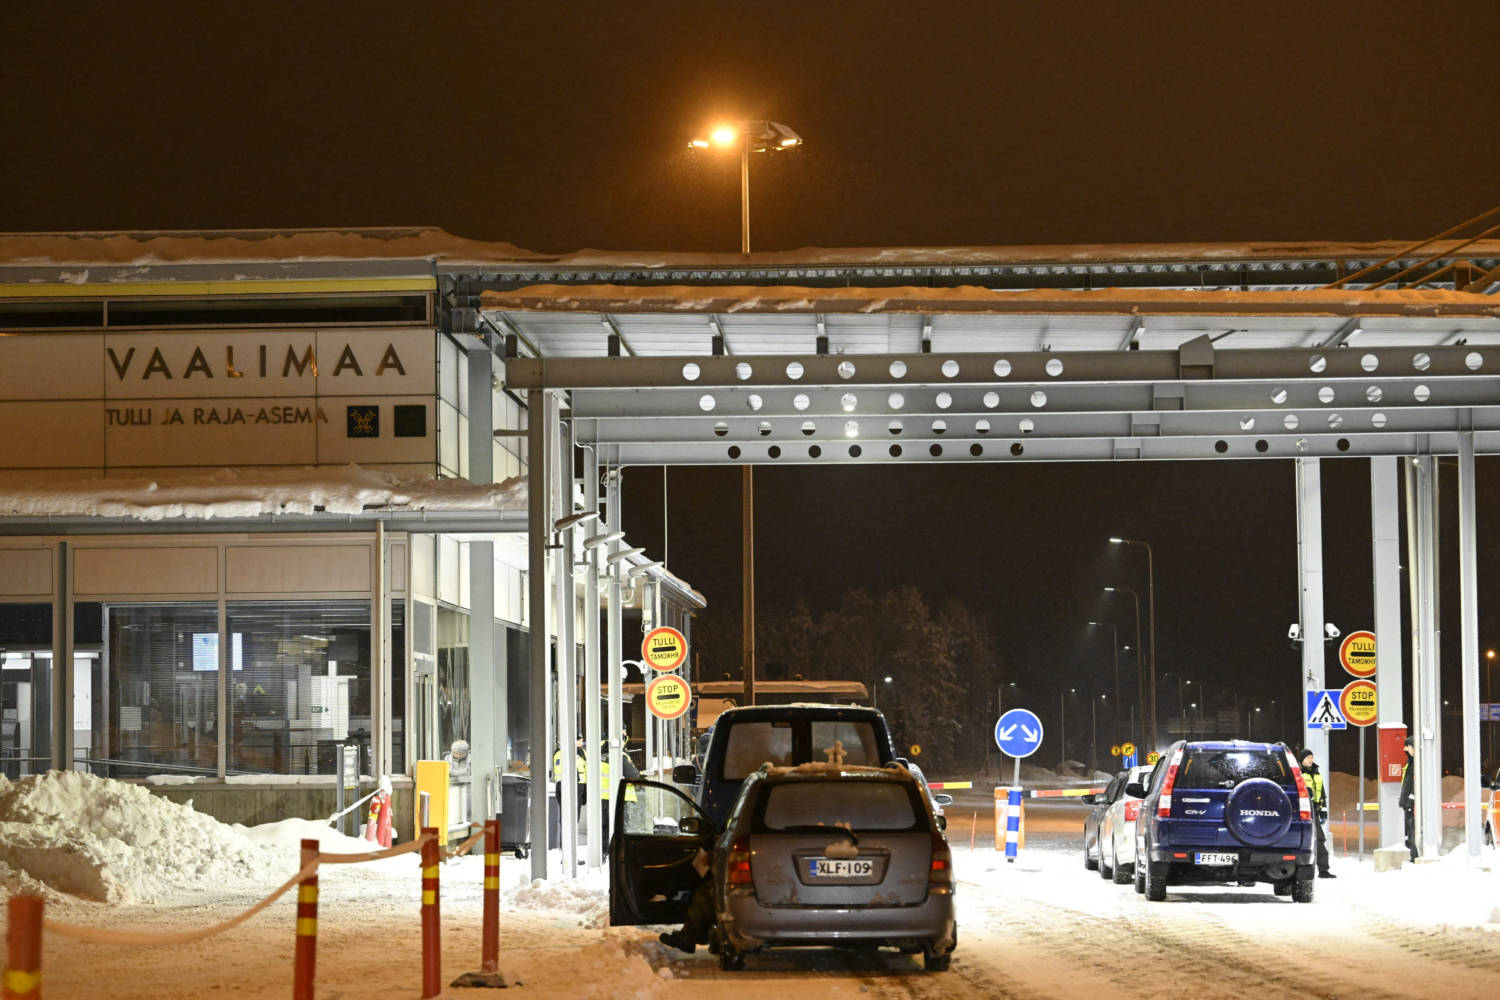 Vaalimaa Border Station Between Finland And Russia